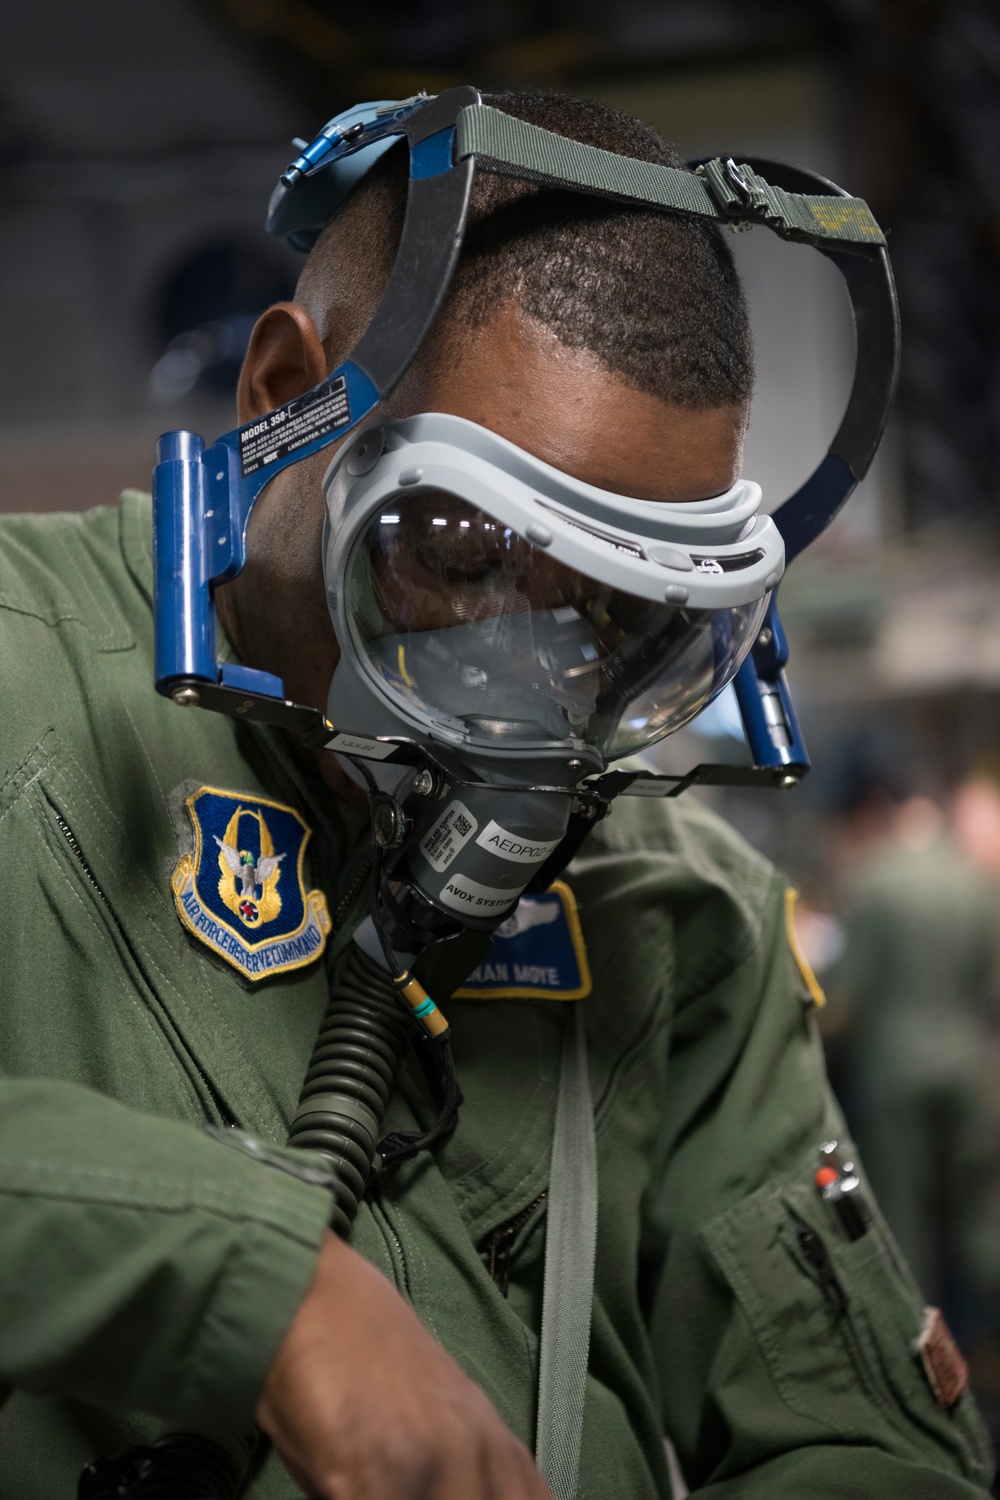 446th Aeromedical Evacuation, Aeromedical Staging squadrons exercise medical skills